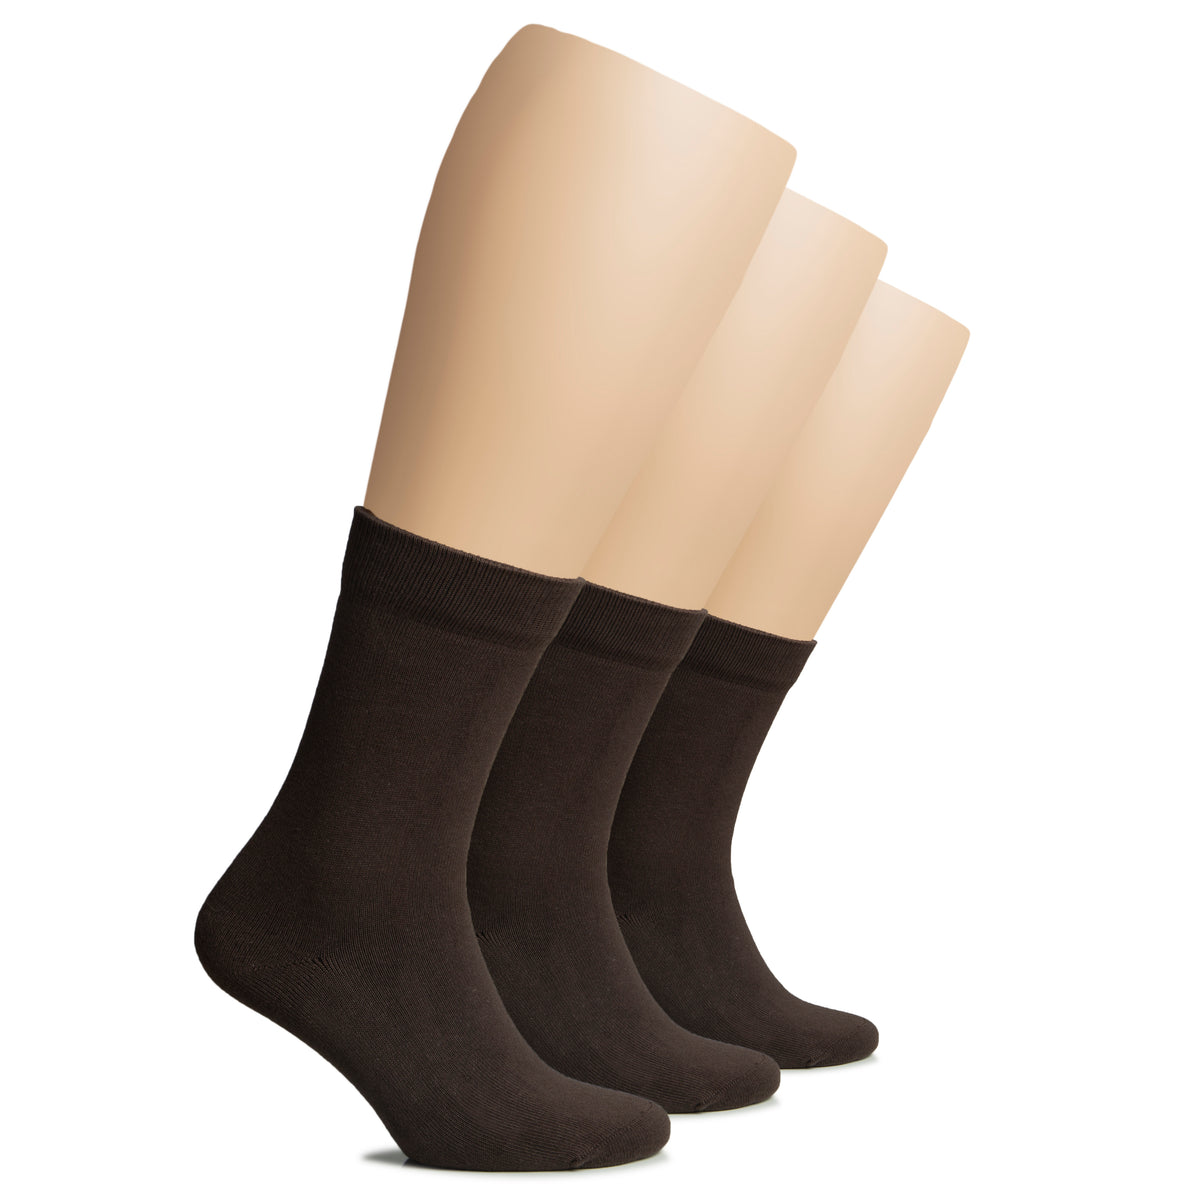 Hugh Ugoli Women Cotton Warm Winter Socks Crew with Seamless Toe, 3 Pairs | Shoe Size: 6-9 | Red / Light Pink / Light Beige (Ecru)